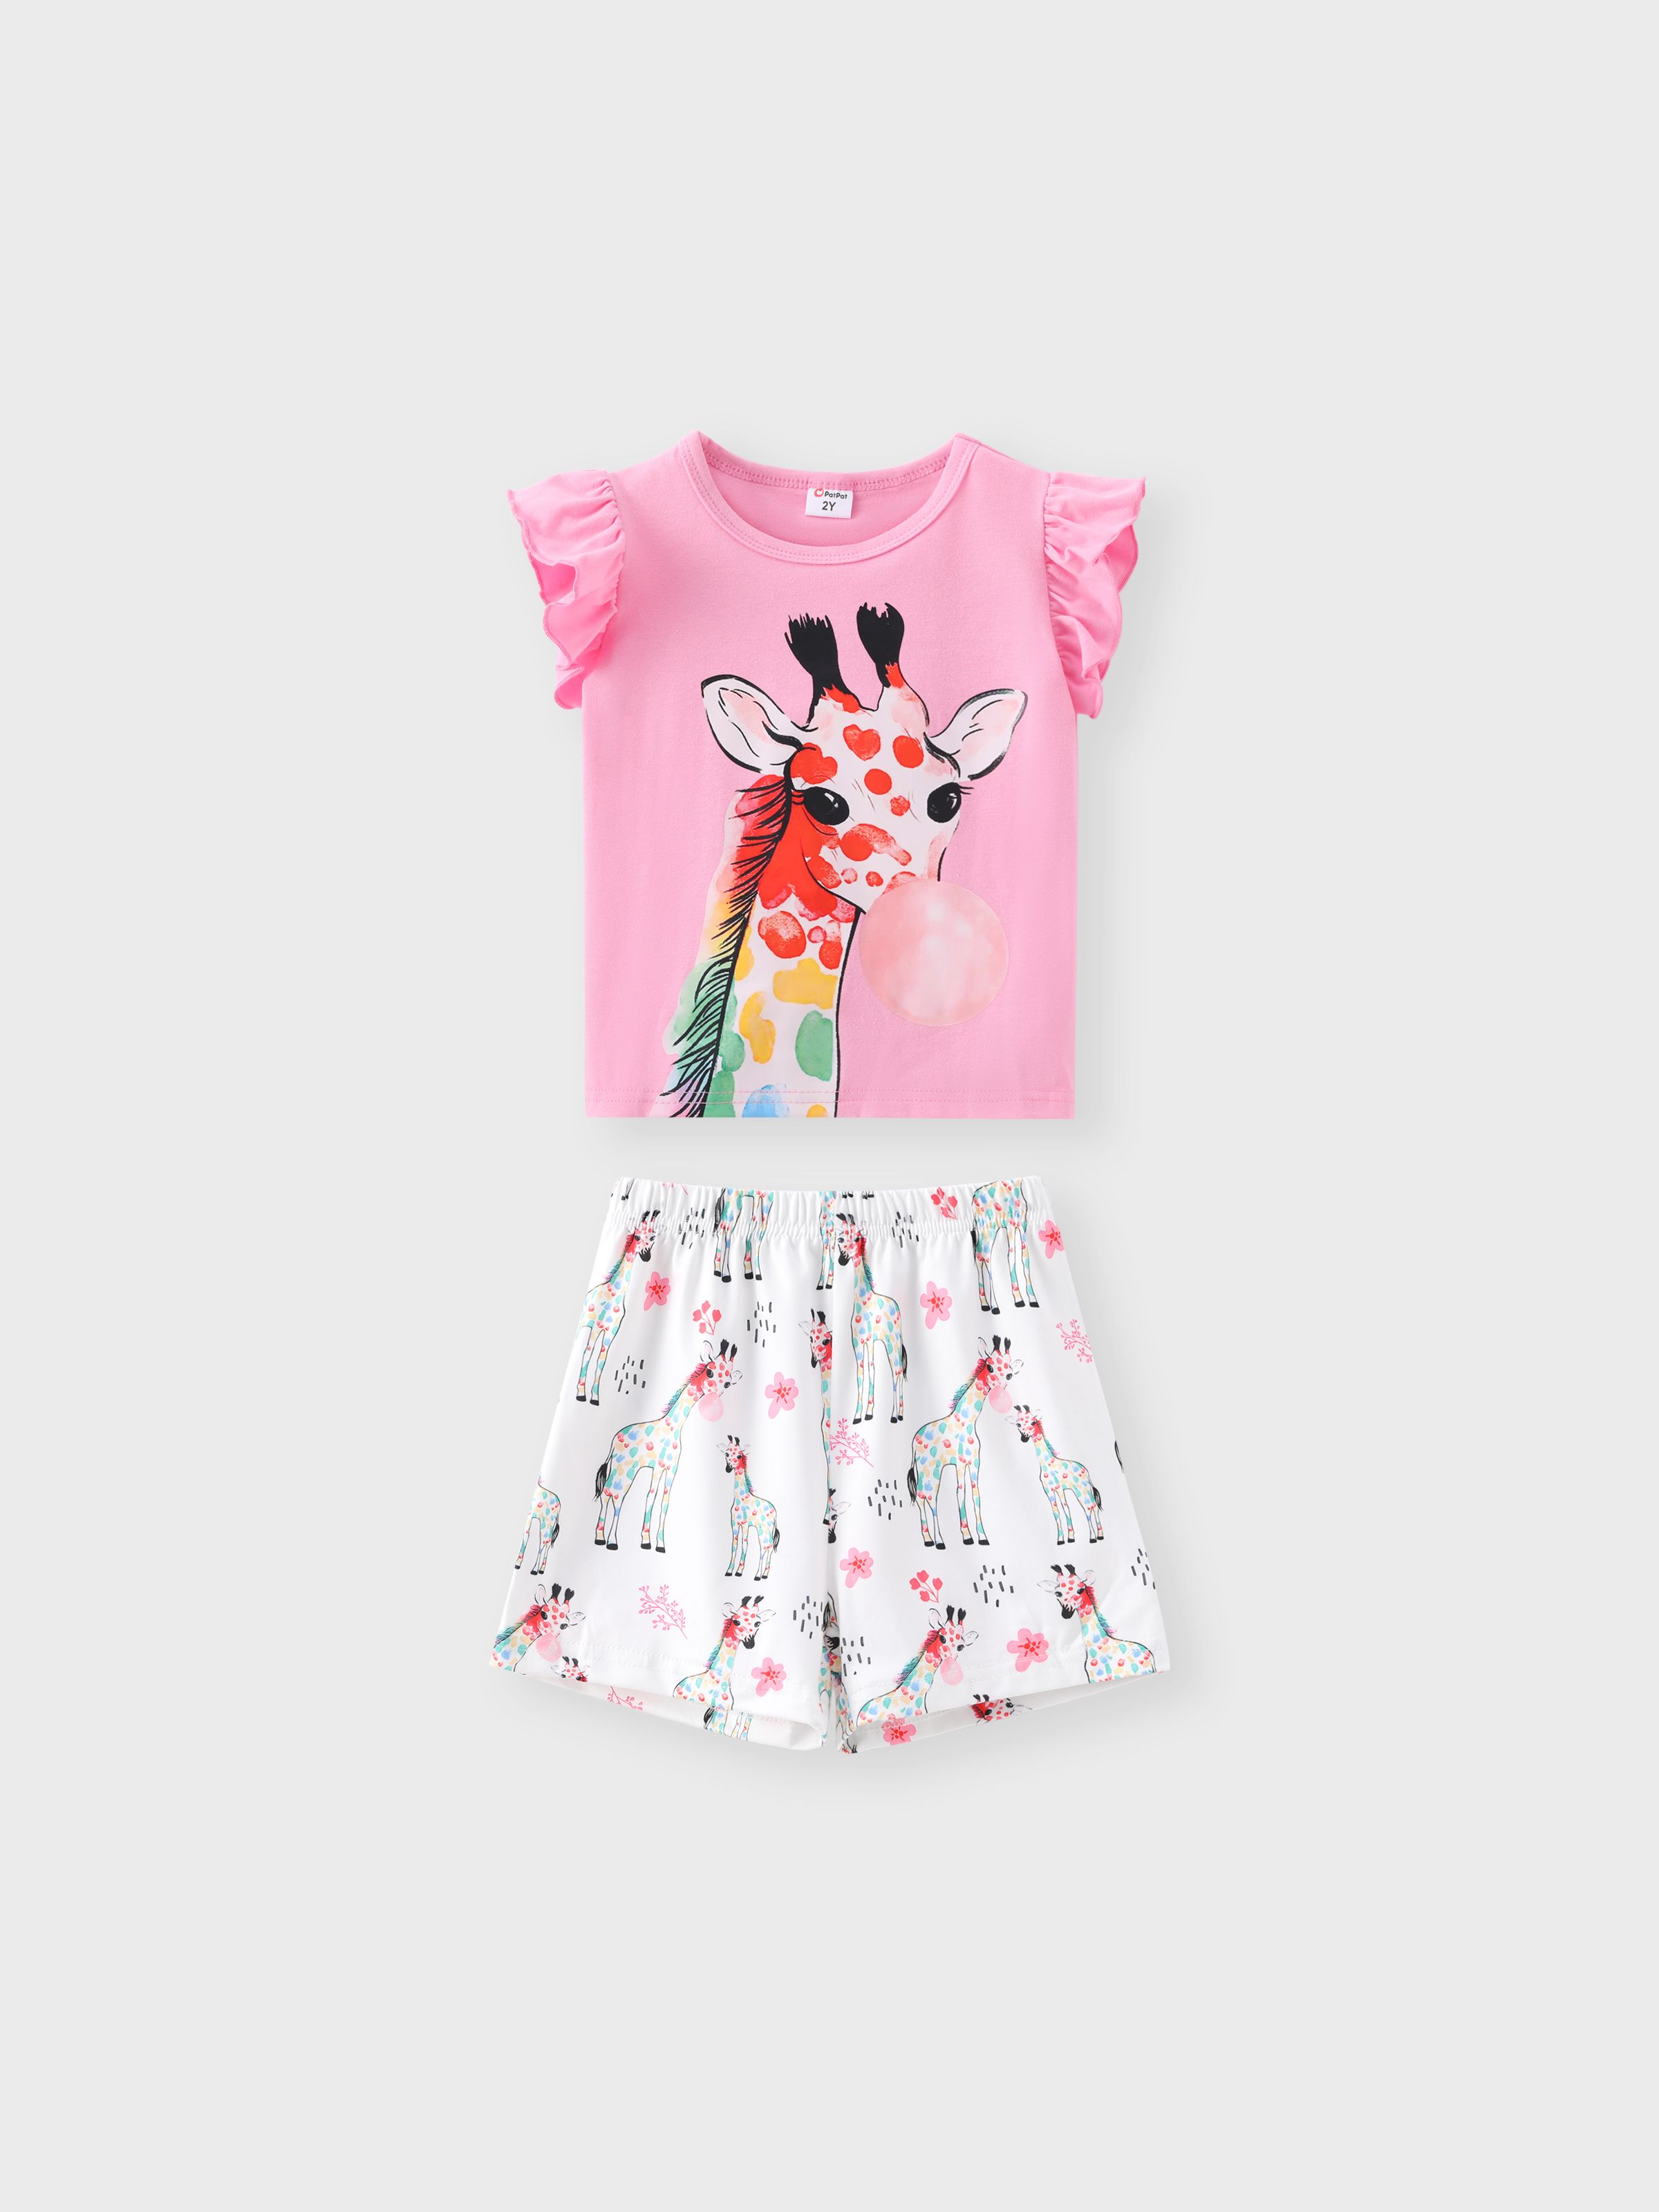 

Giraffe Flutter Sleeve Toddler Girl 2pcs Set, Polyester/Cotton Blend, Regular, Machine Washable